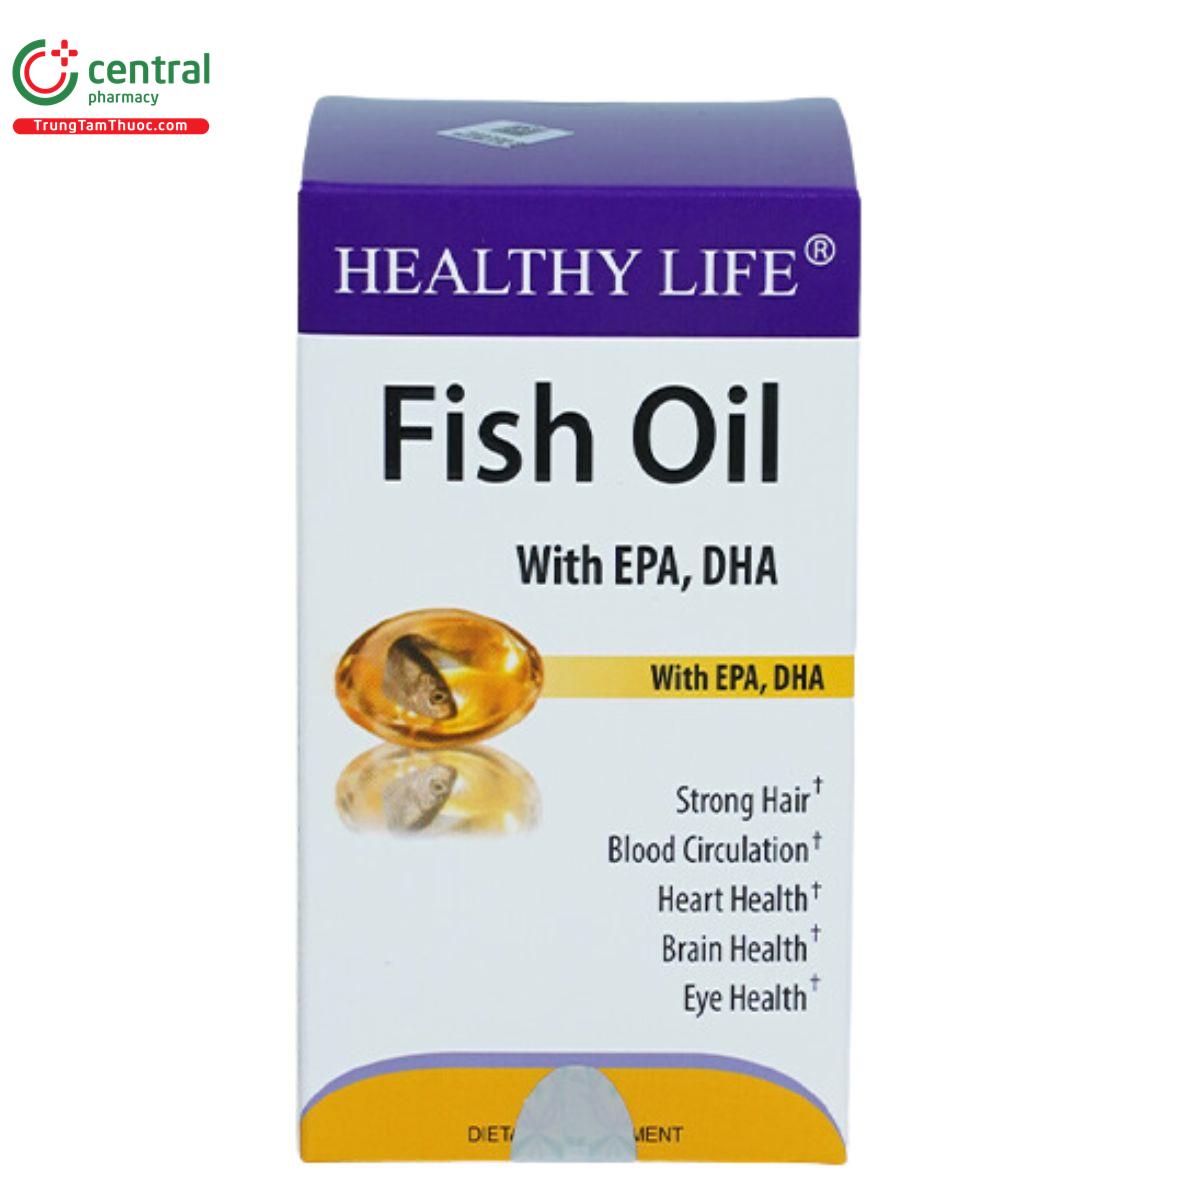 healthy life fish oil 7 O5086